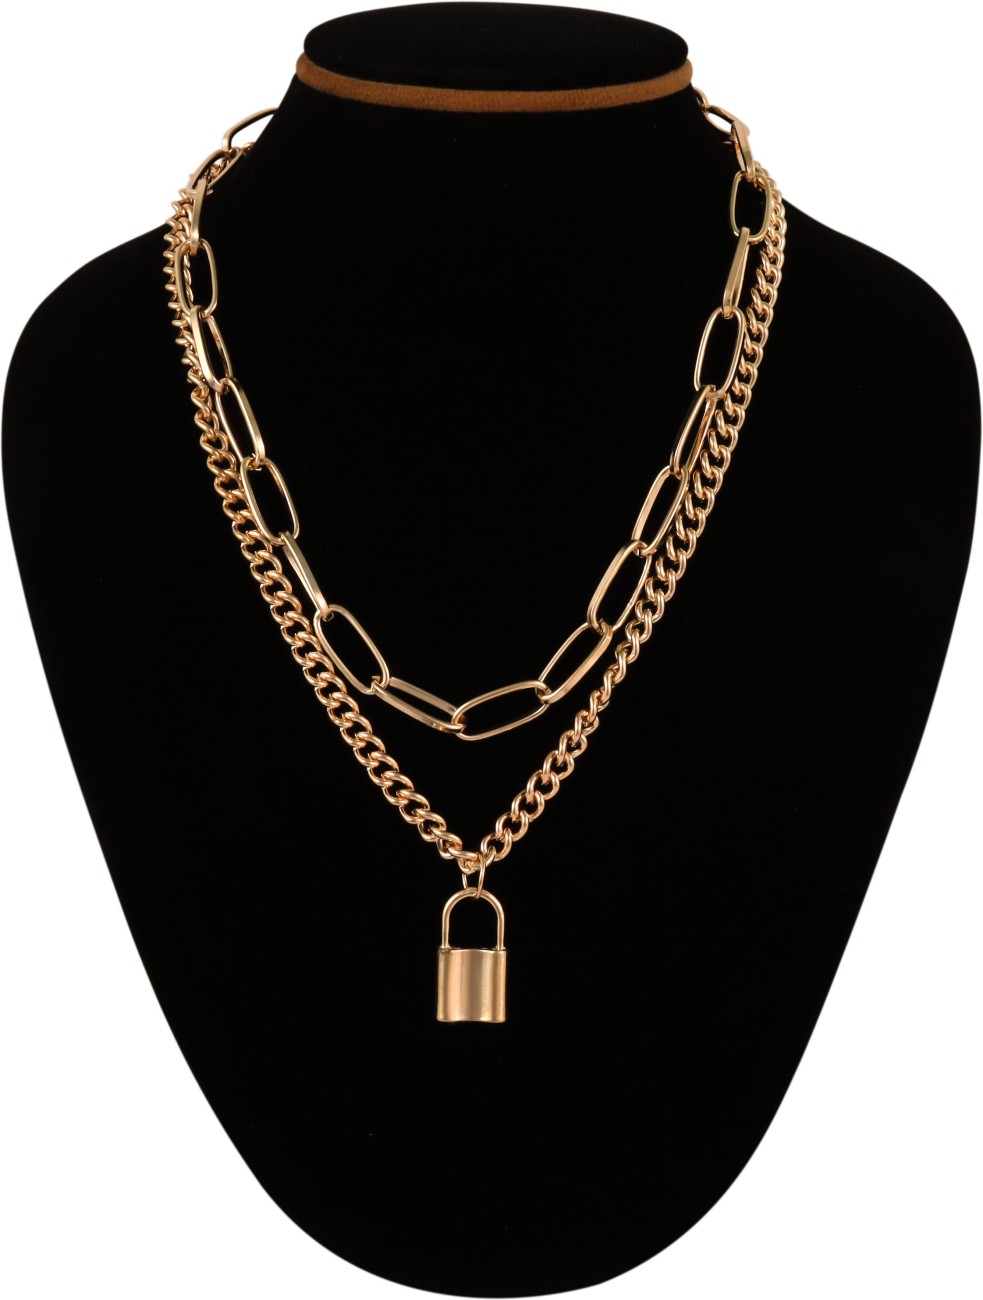 Buy Fashion Frill Stylish Gold Plated Lock Design Layered Necklace